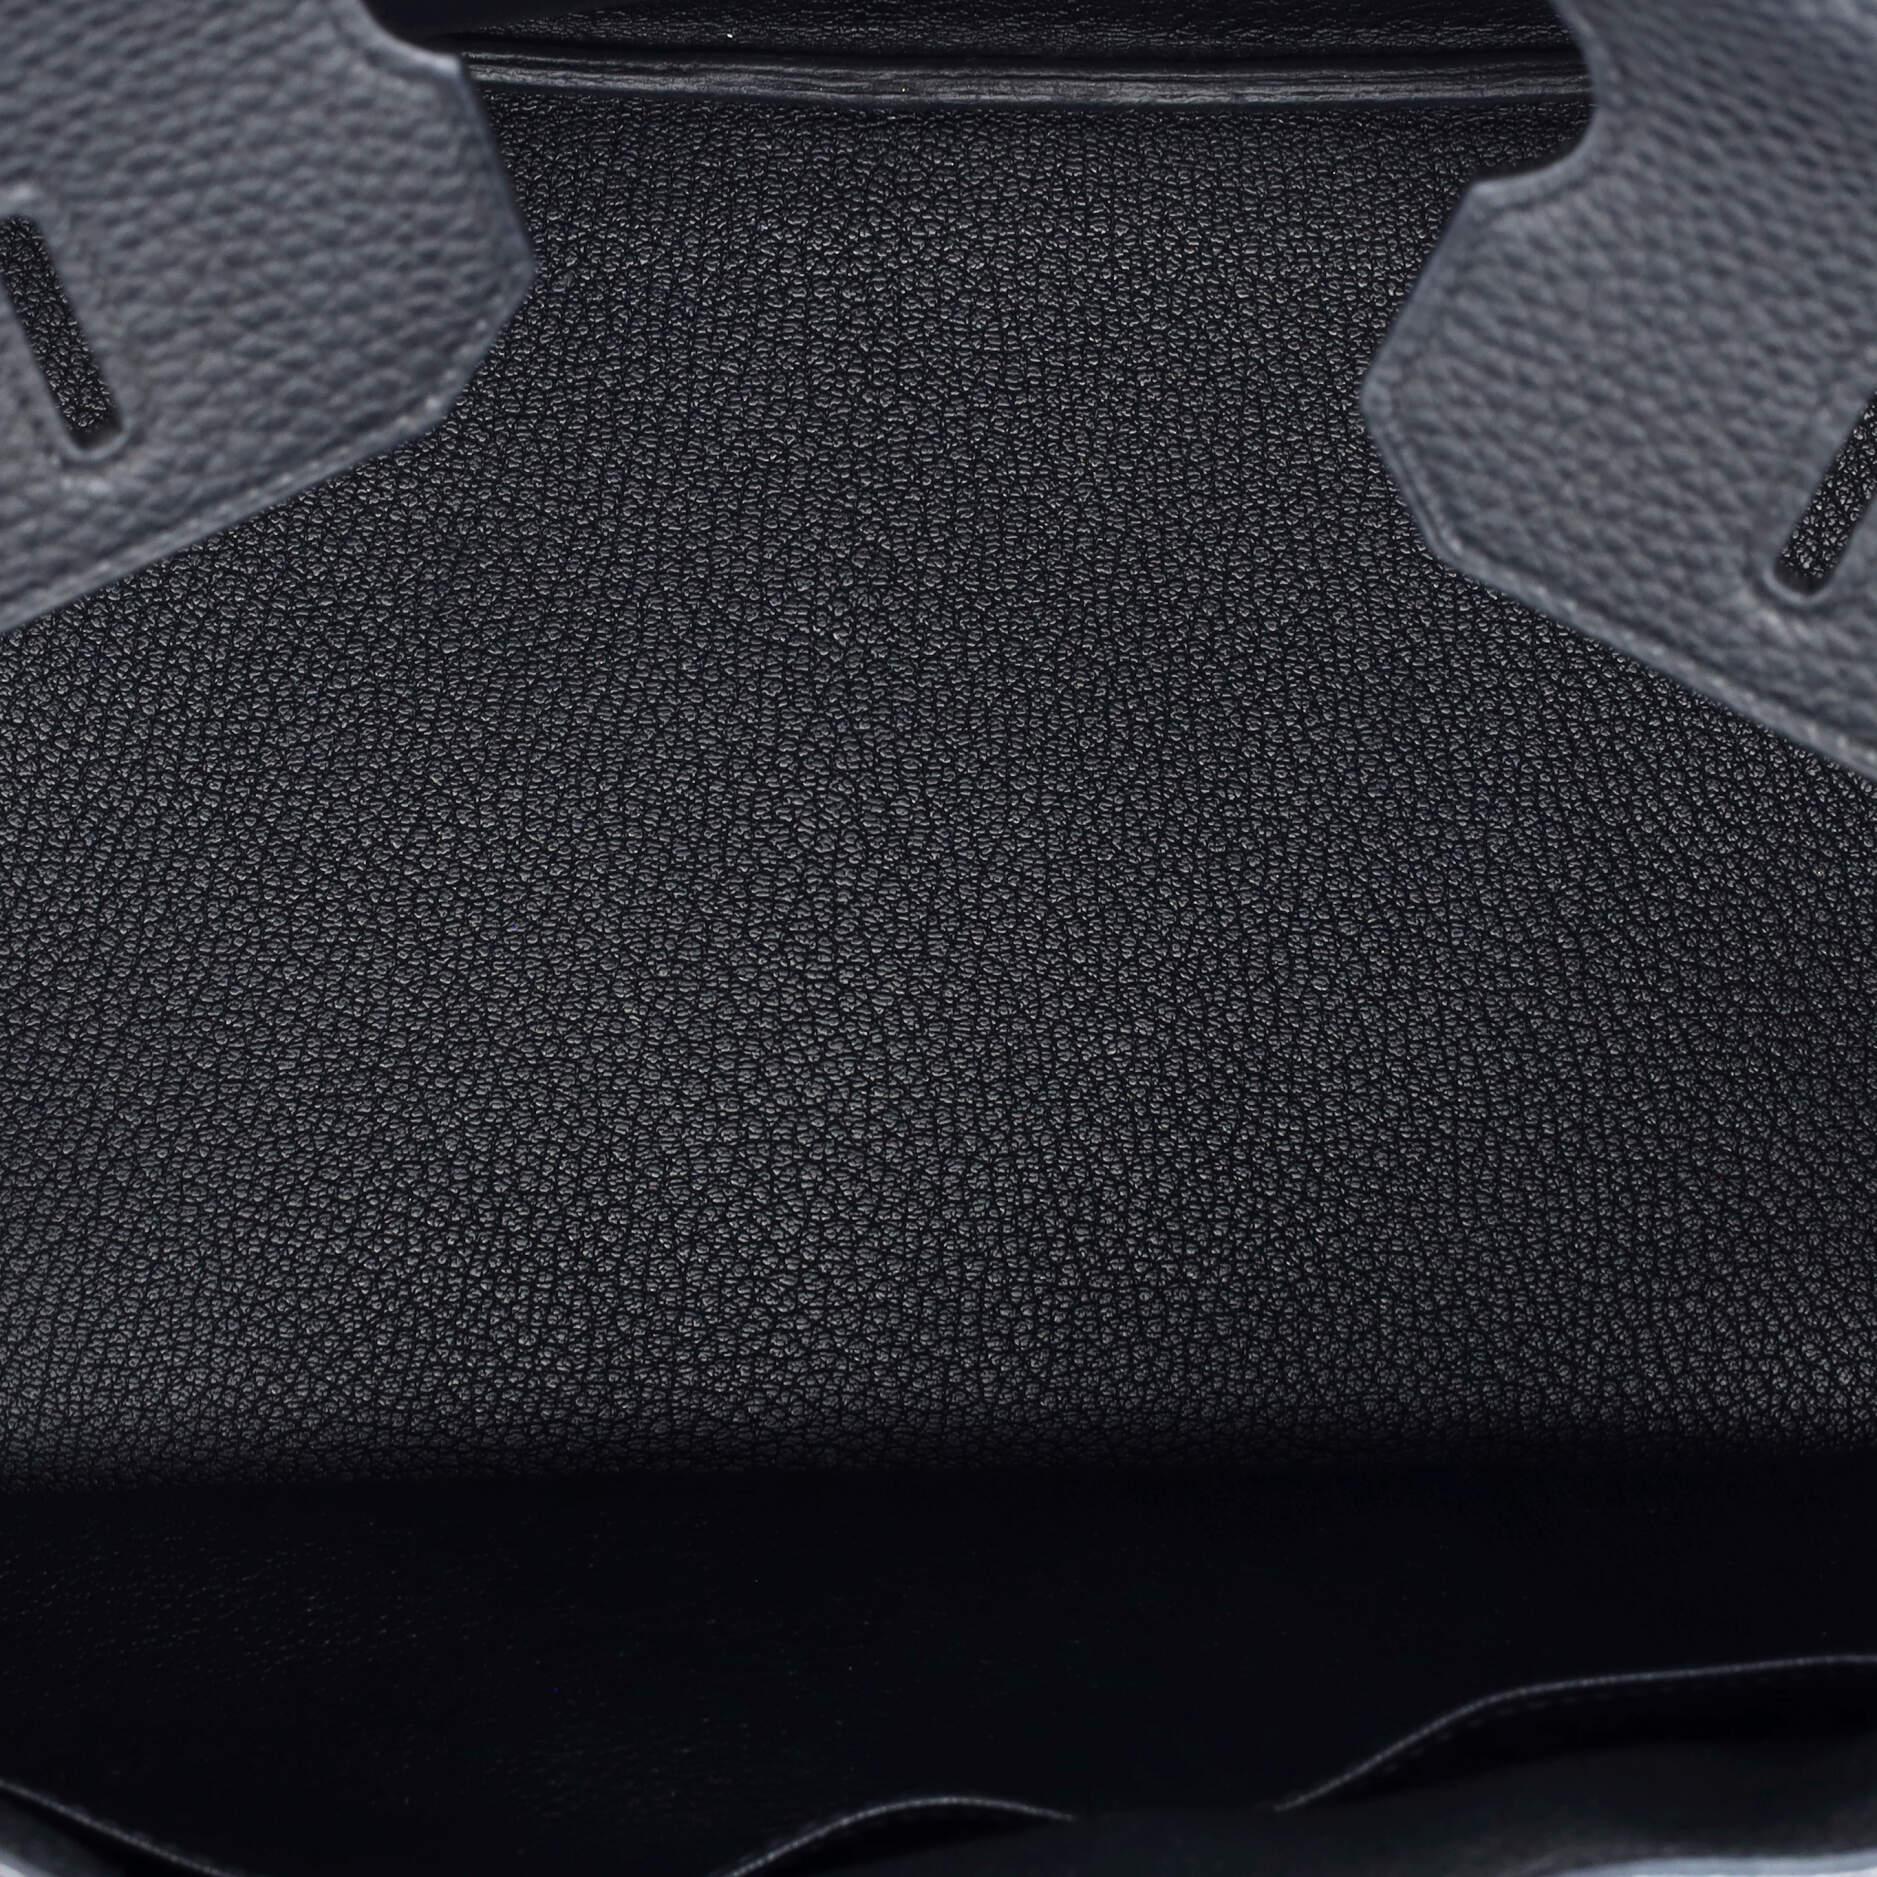 Hermes Birkin Handbag Noir Togo with Palladium Hardware 35 2